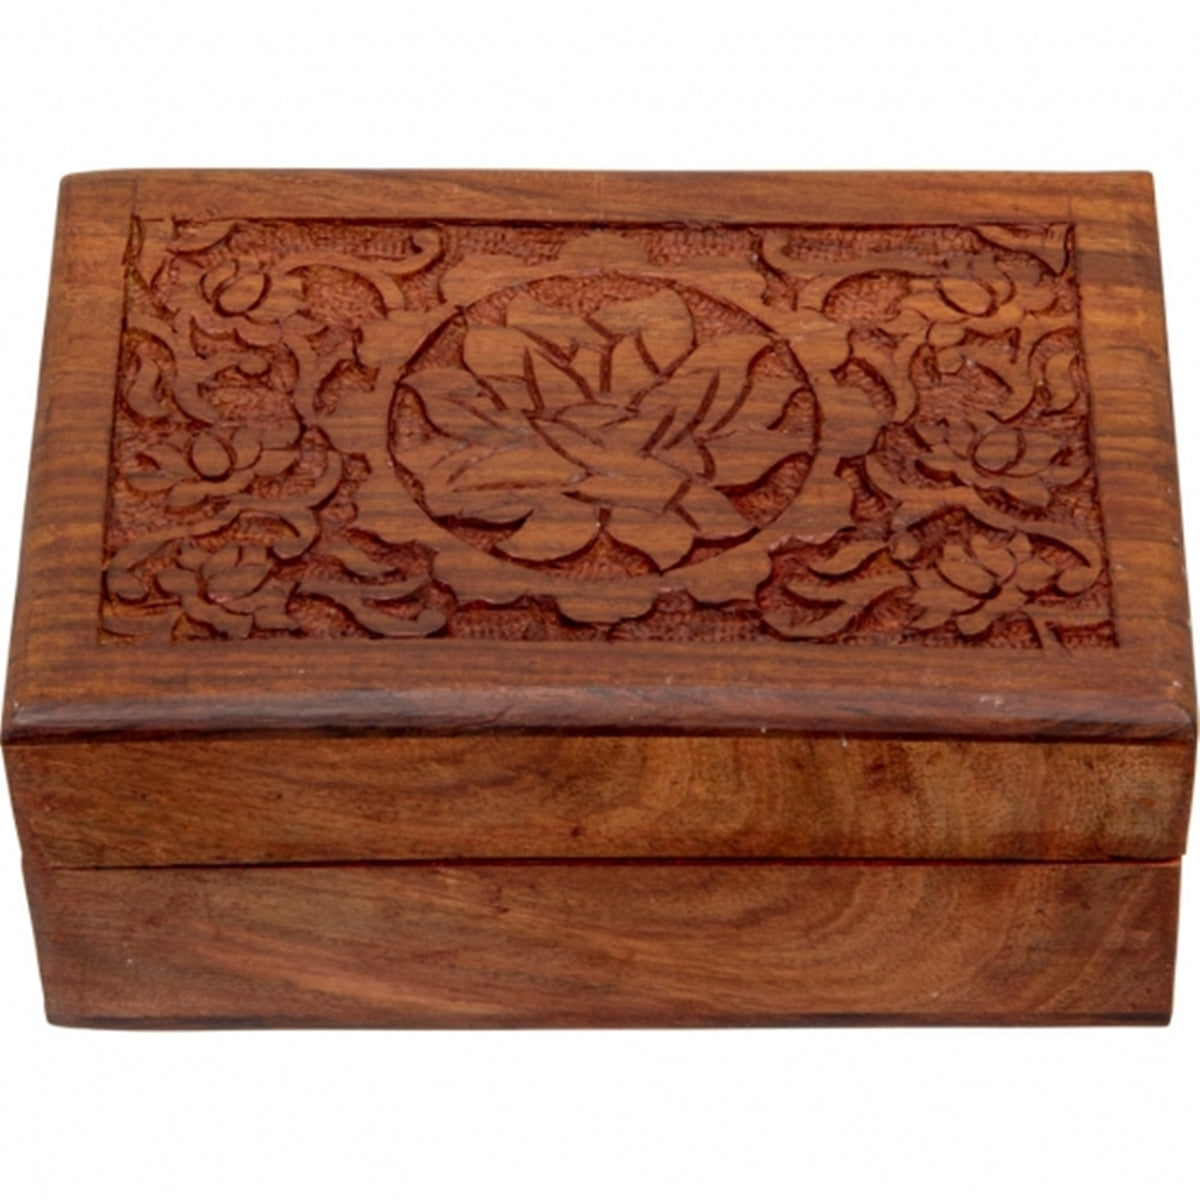 Wood Box - Lotus Flower